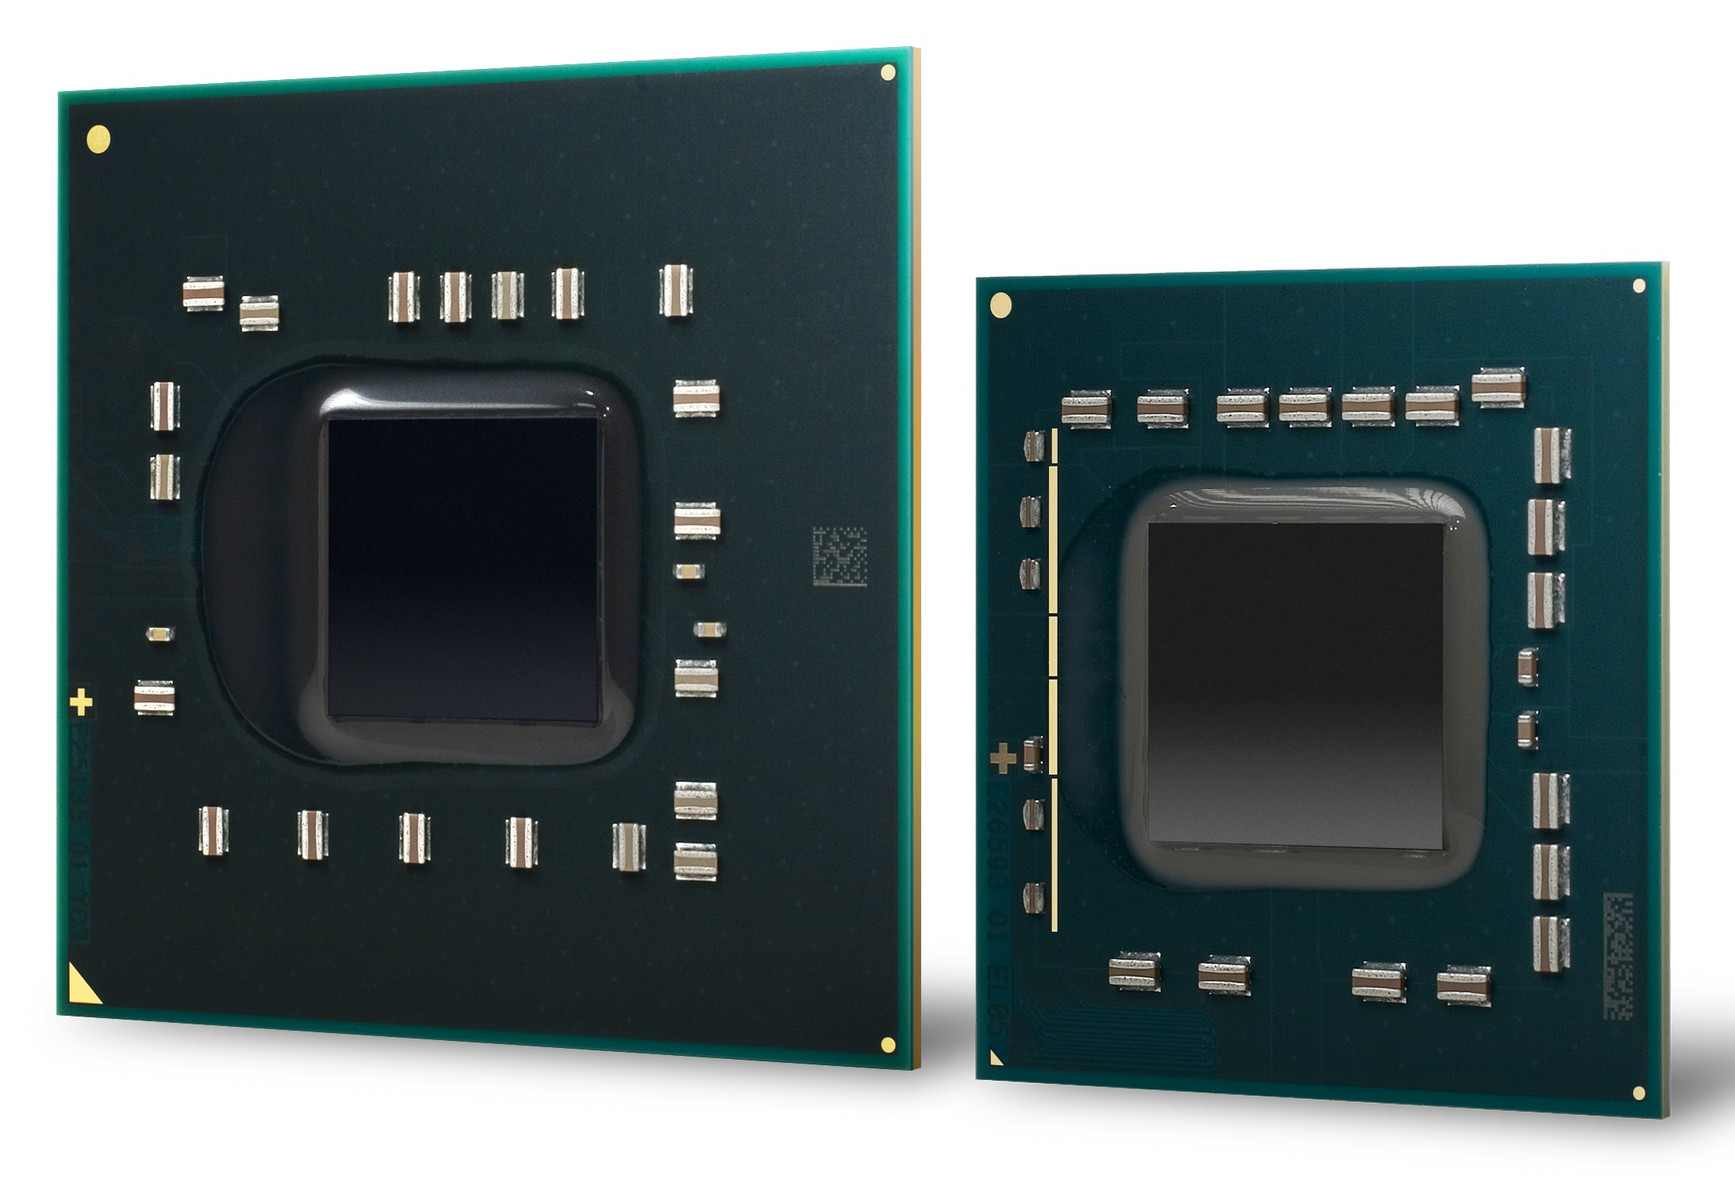 Intel Gma 4500m Dynamic Video Memory Technology 5.0